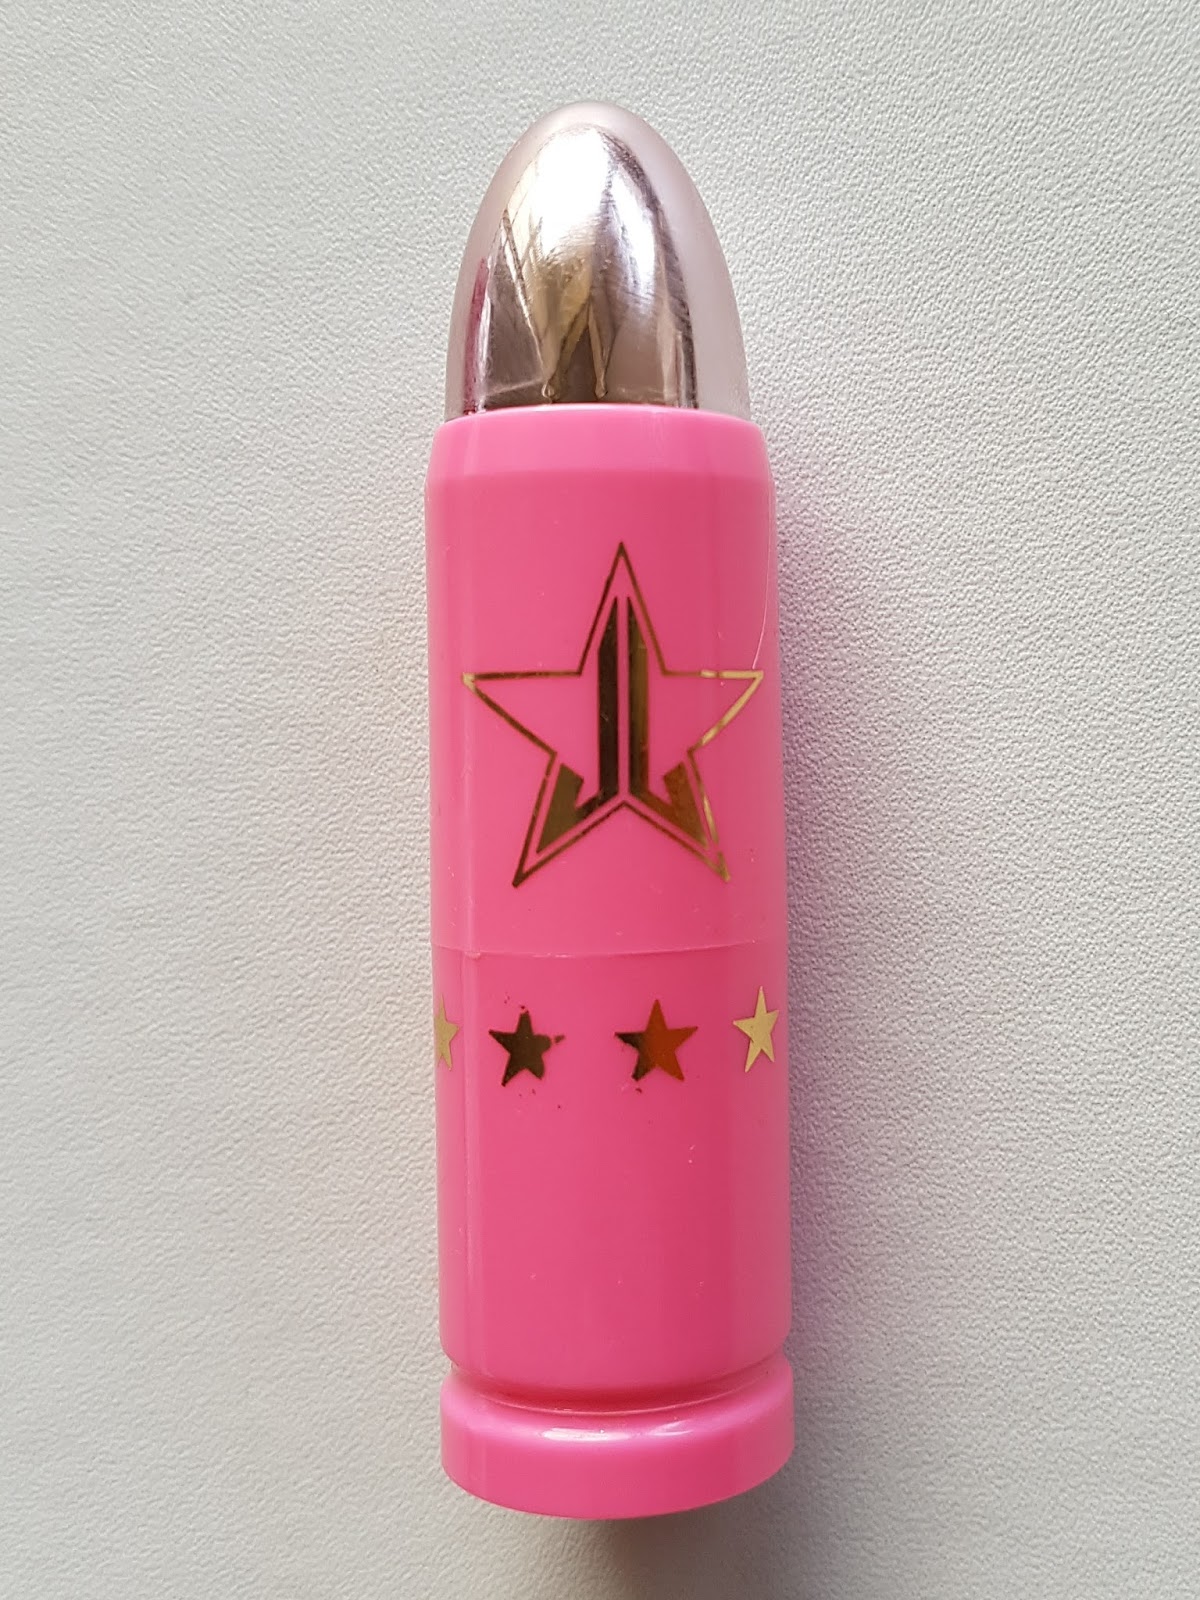 Jeffree Star Cosmetics Lip Ammunition Grandaddy Purp 